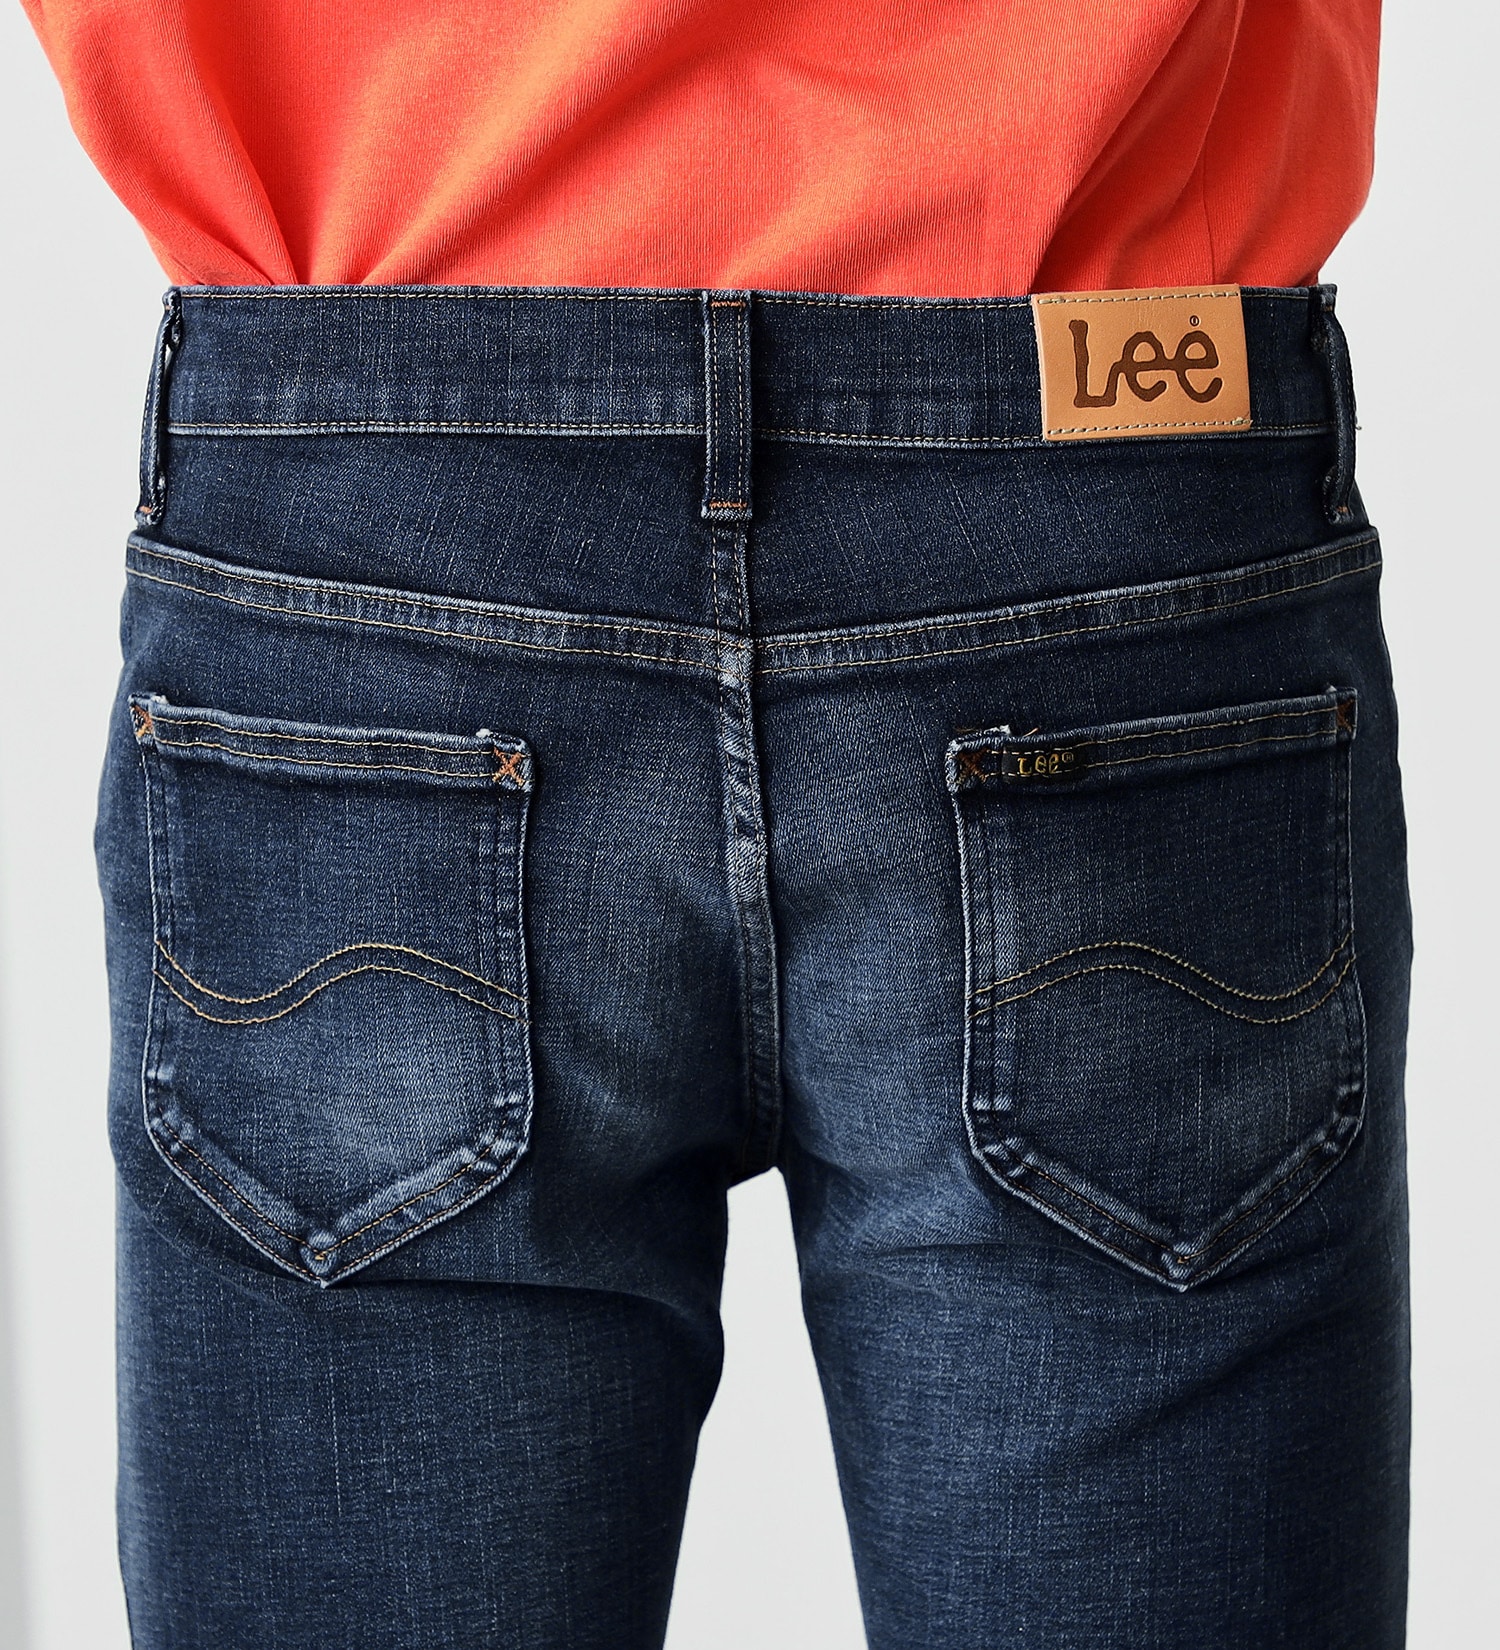 Lee(リー)の【超快適ストレッチ】すっきり細身スキニーパンツ|パンツ/デニムパンツ/メンズ|濃色ブルー